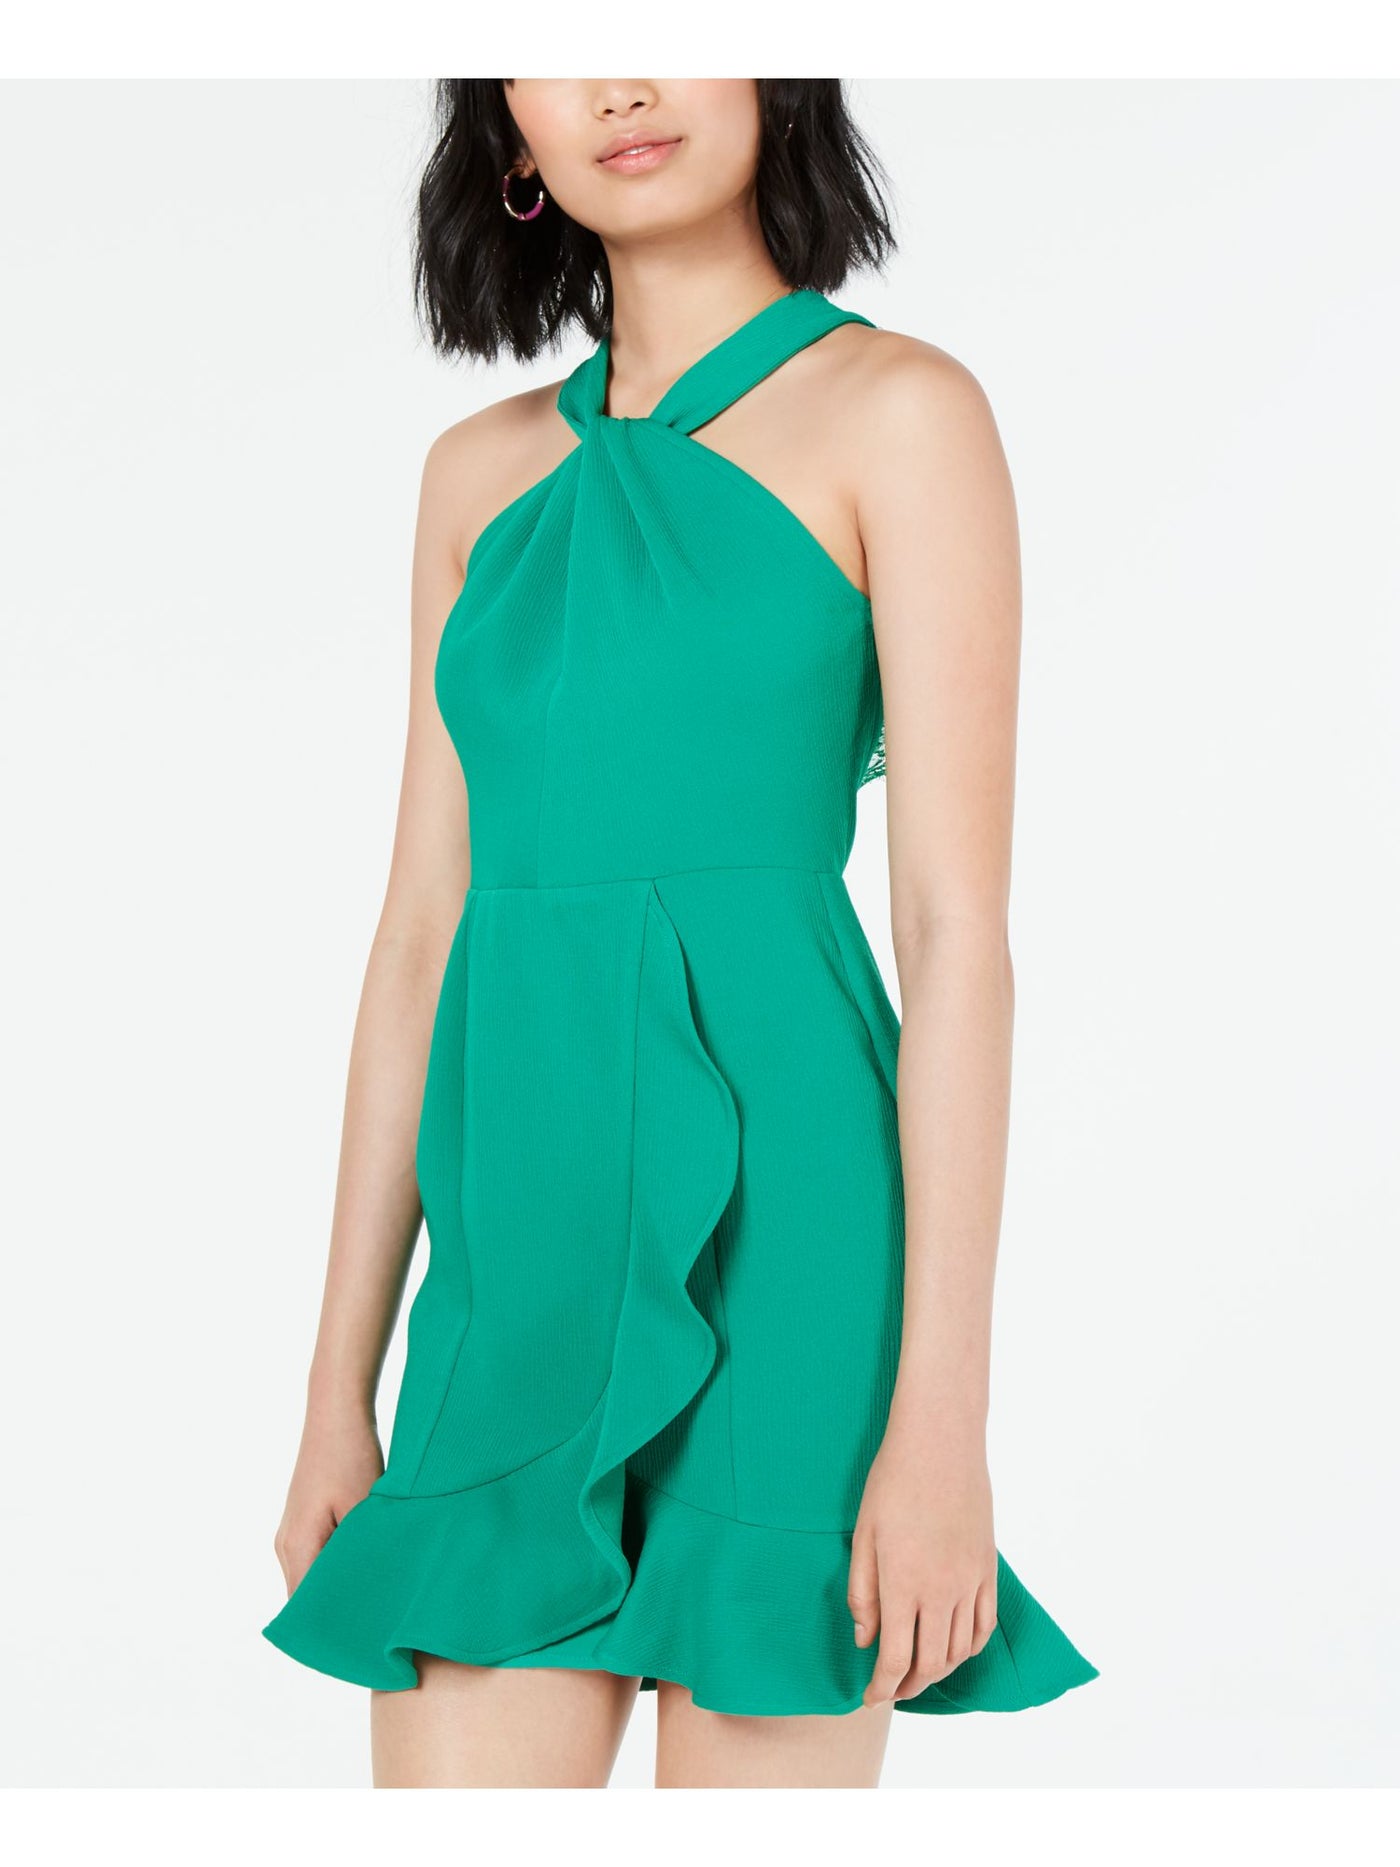 19 COOPER Womens Green Lace Ruffled Sleeveless Halter Mini Party Shift Dress M